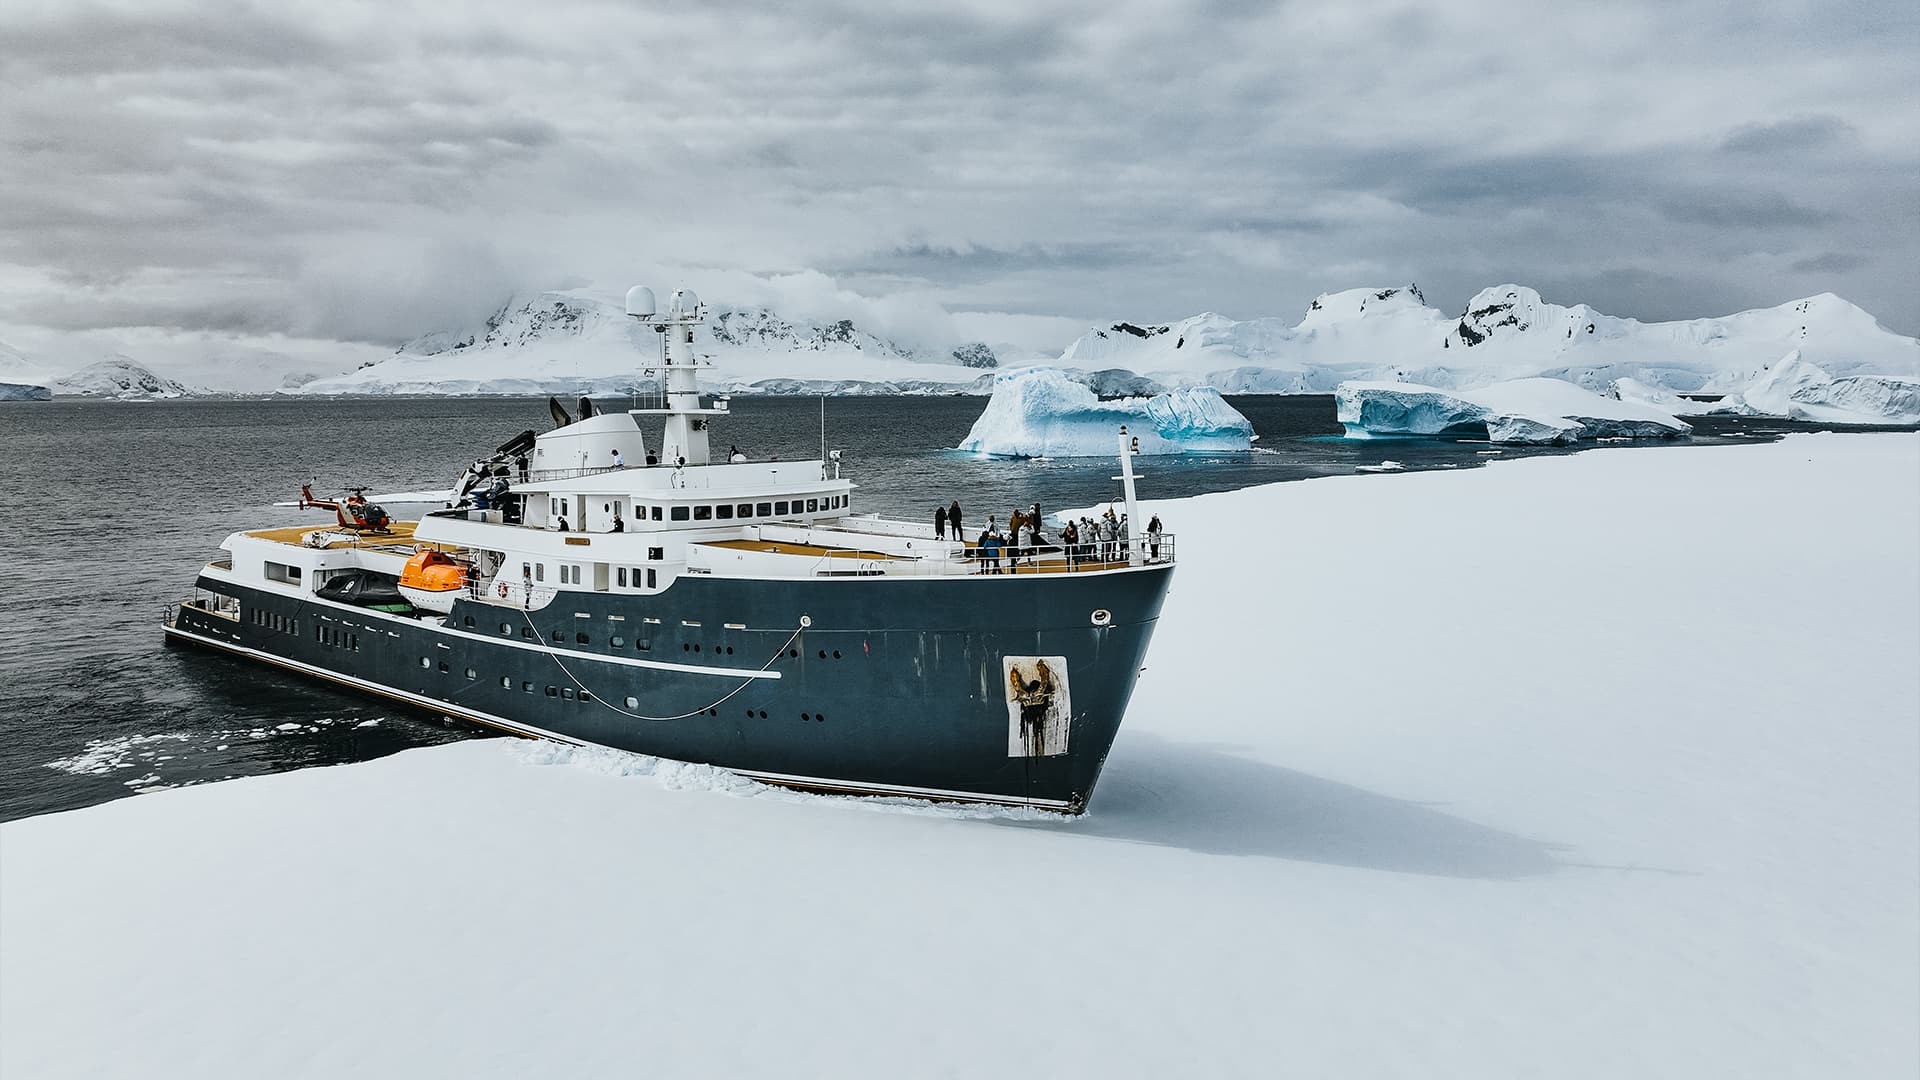 Legend Expedition Yacht | Antarctica Peninsula